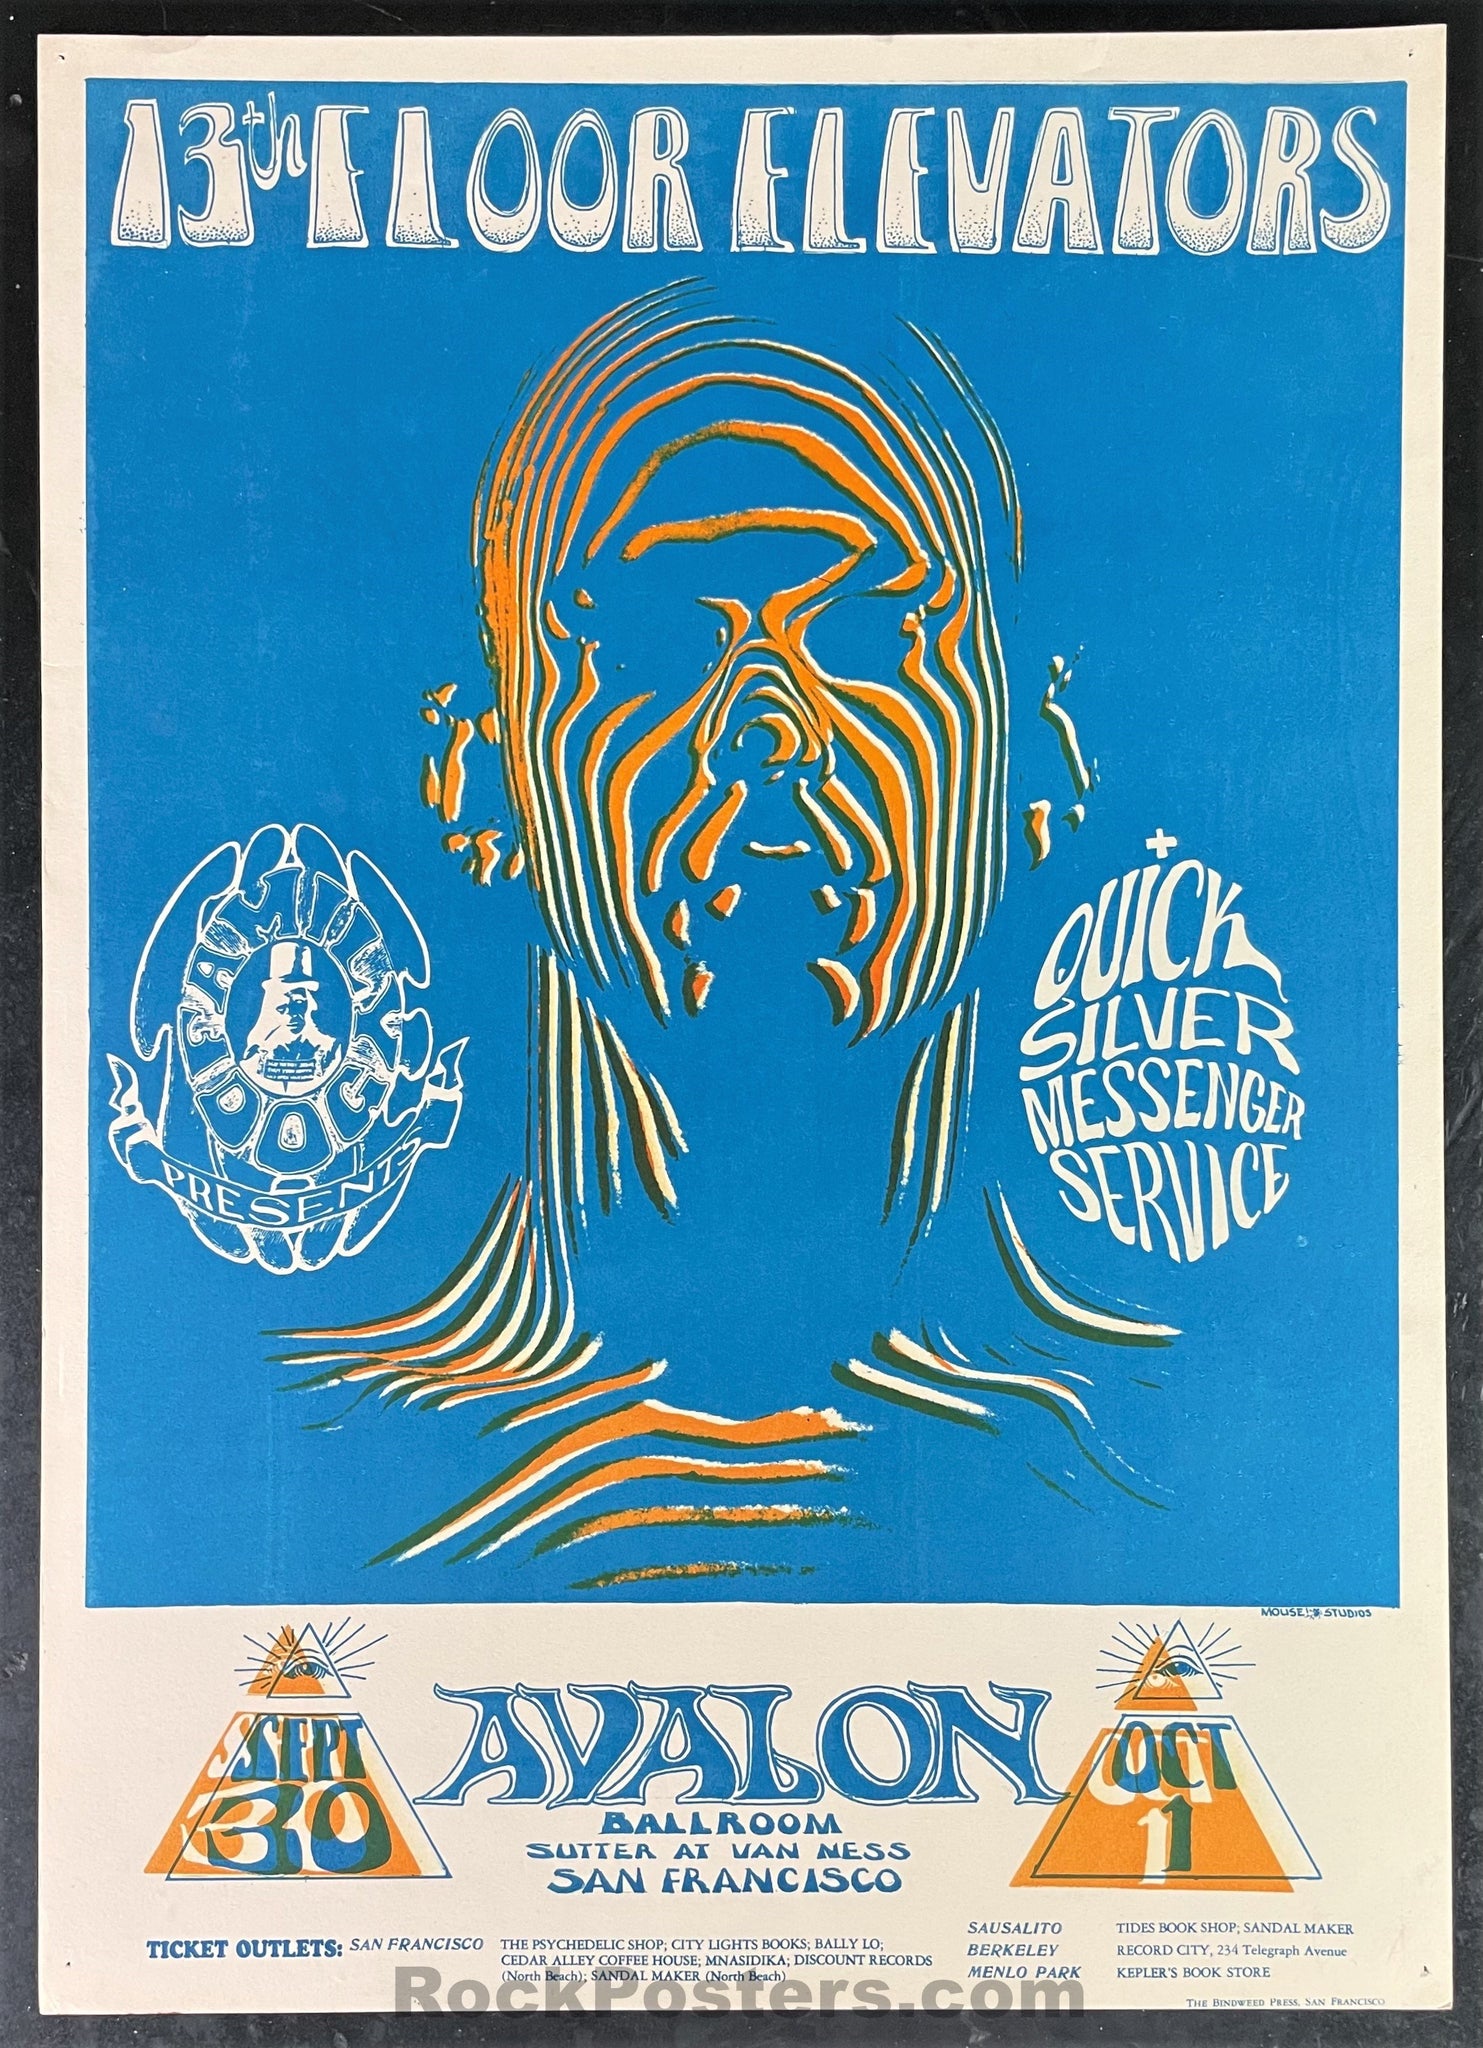 AUCTION - FD-28 - 13th Floor Elevators - 1966 Poster - Avalon Ballroom - Excellent